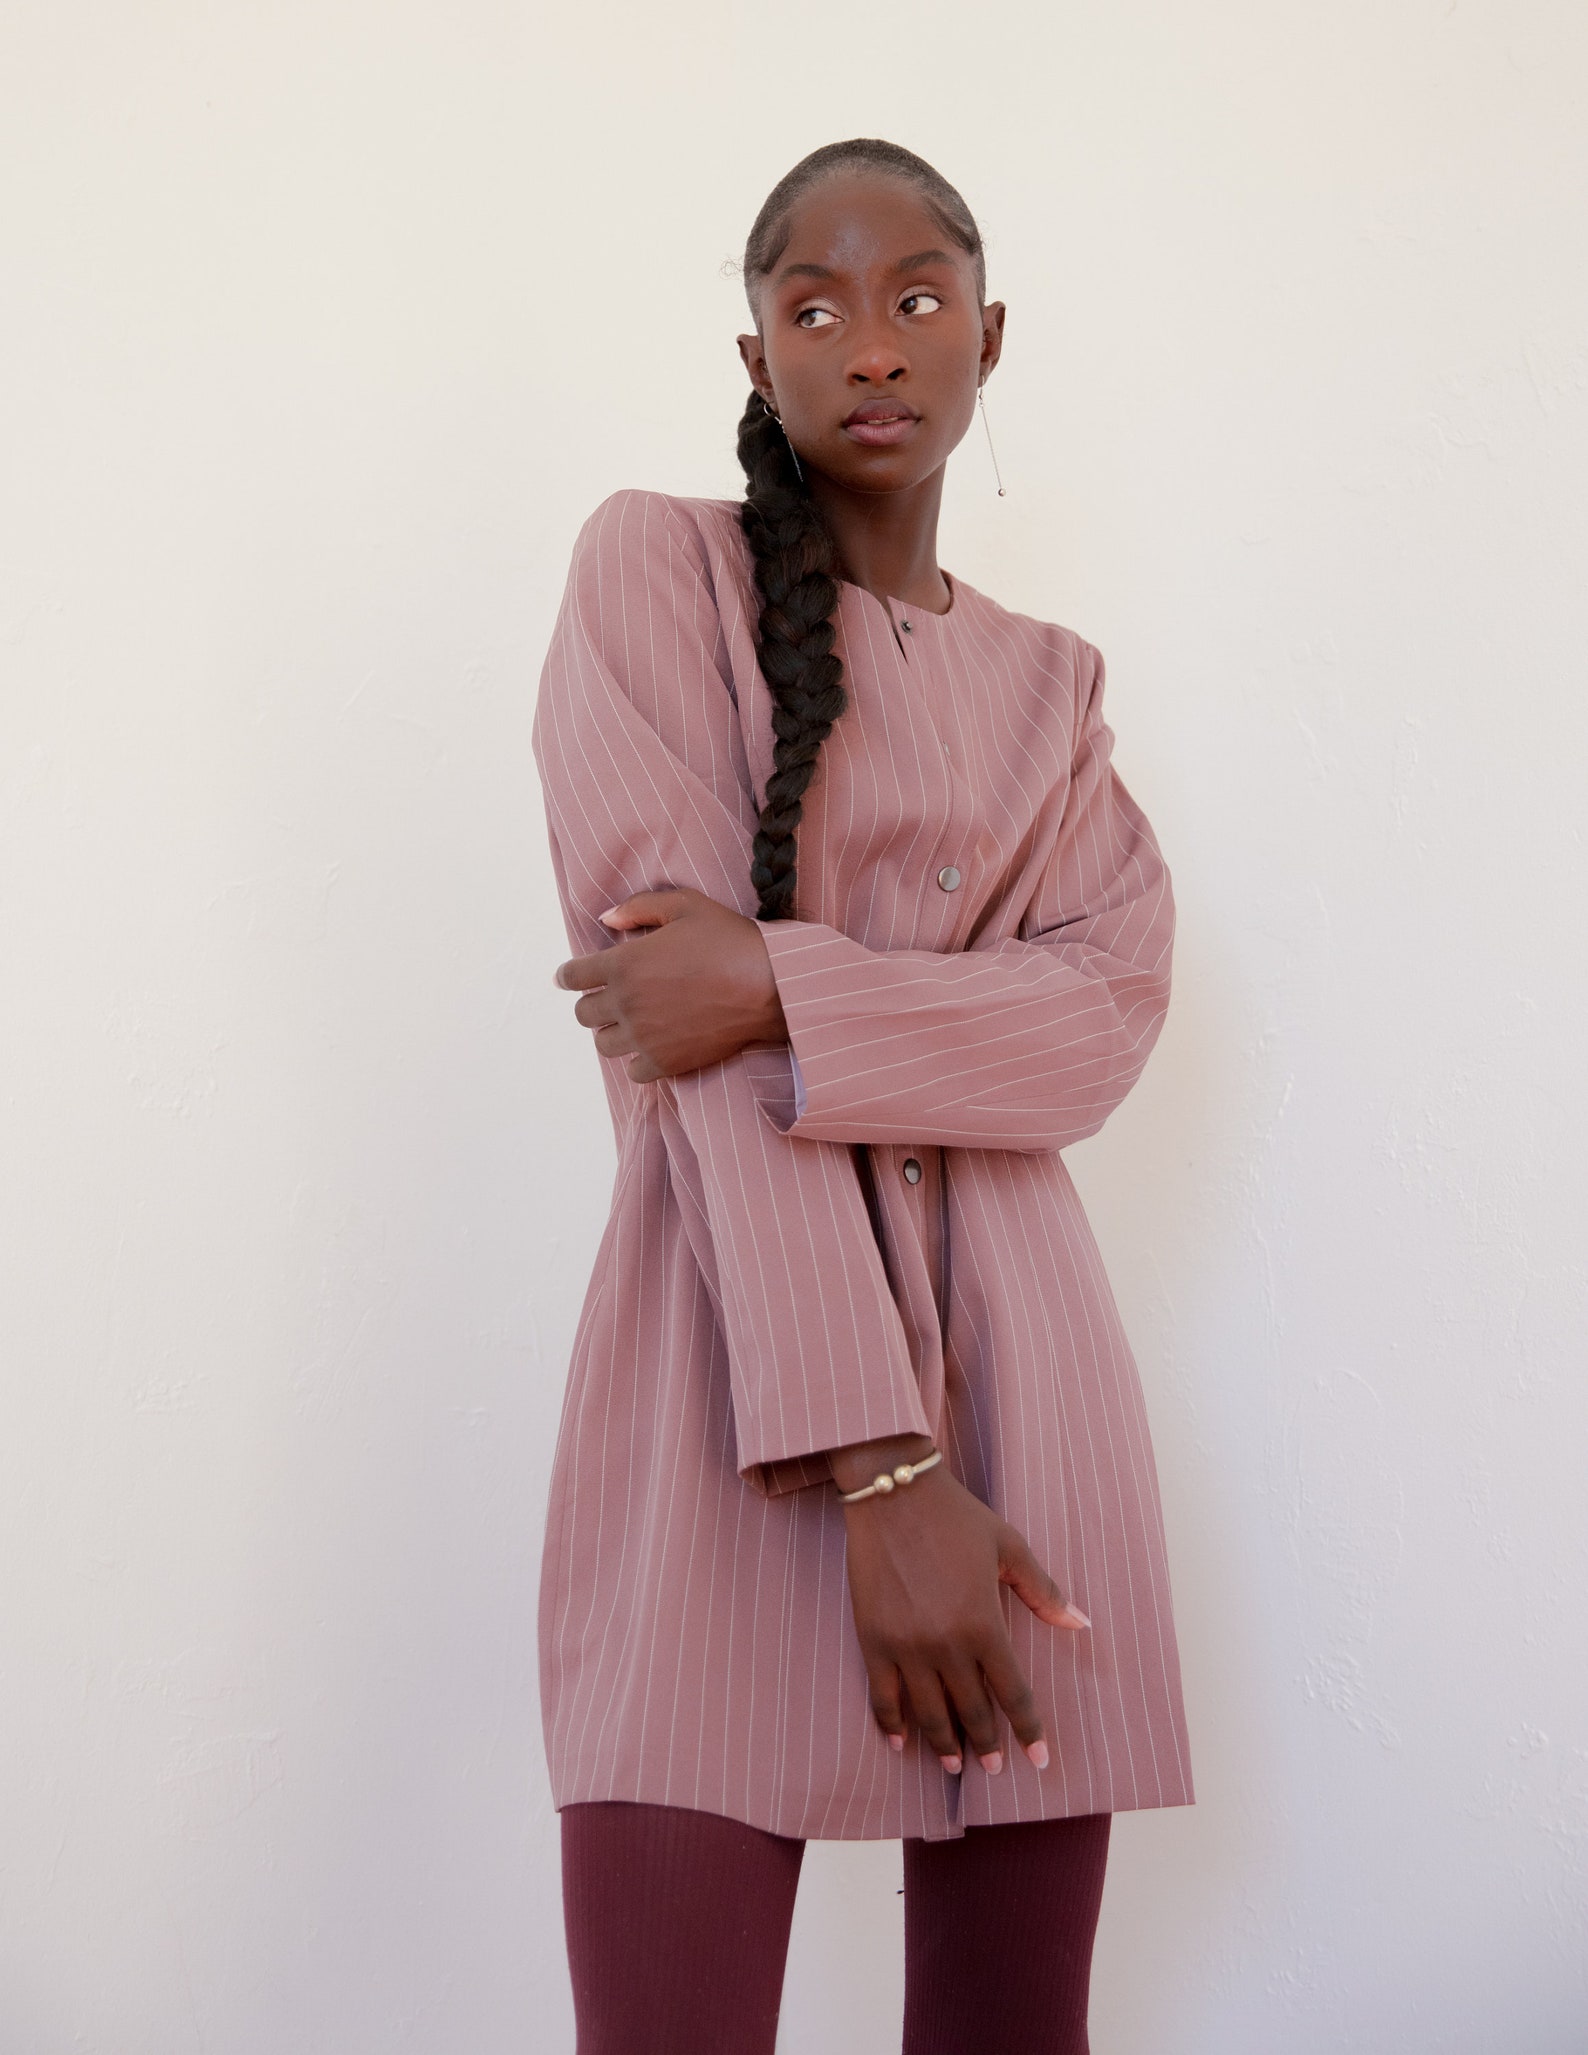 Dusty Rose Pink Vintage Inspired Longsleeve Blazer Dress | Etsy